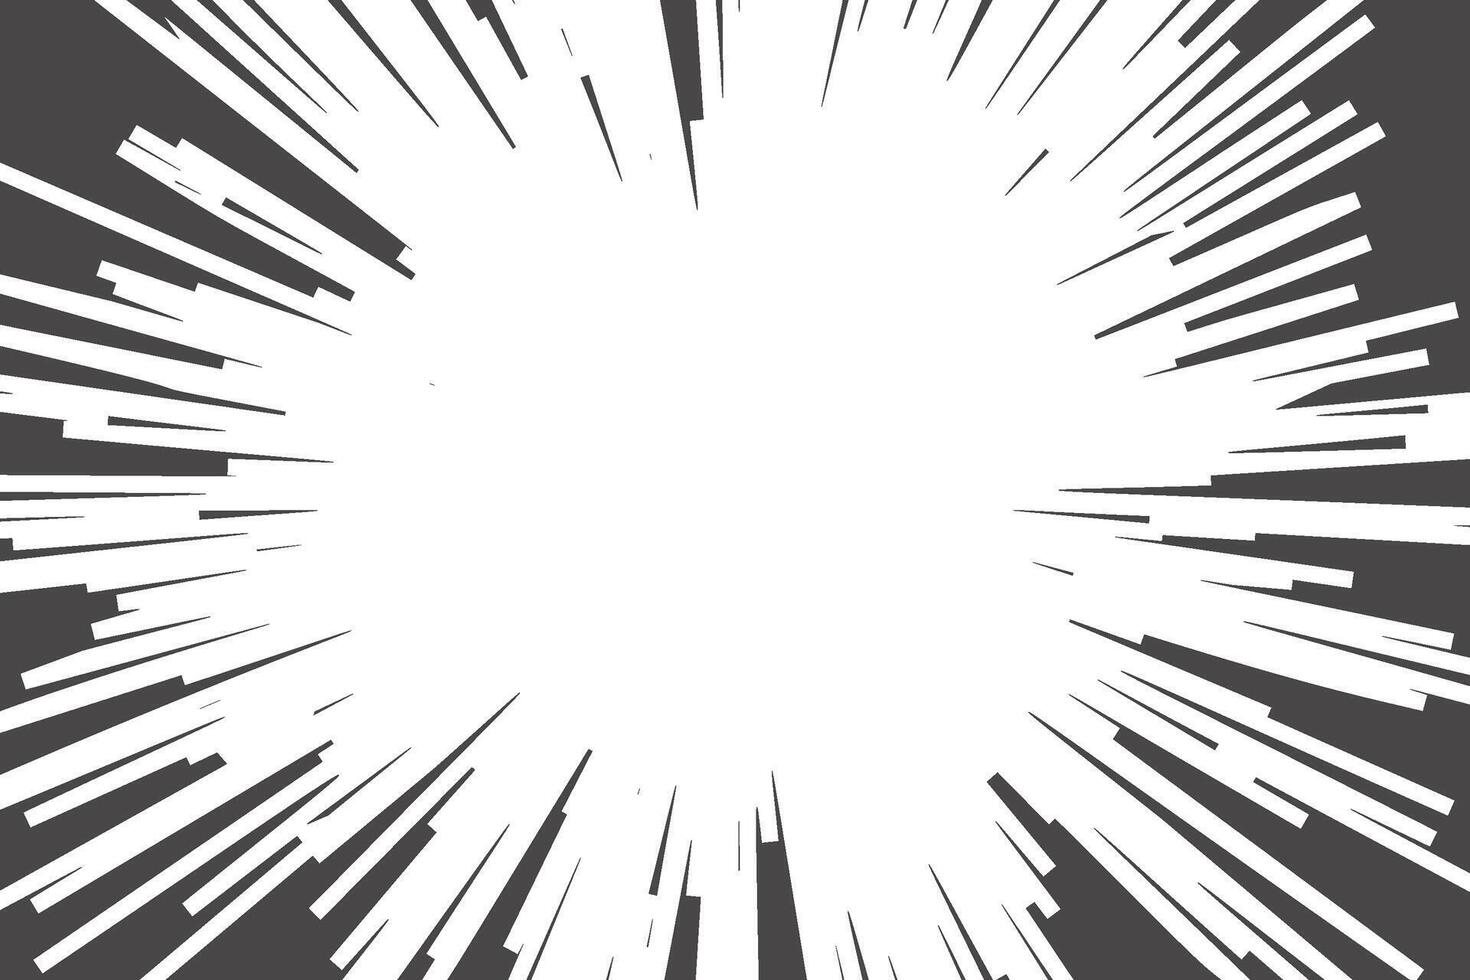 radial trama de semitonos líneas antecedentes. cómic manga punteado modelo. dibujos animados enfocar efecto con rayos de sol o explosión explosión. vector. vector